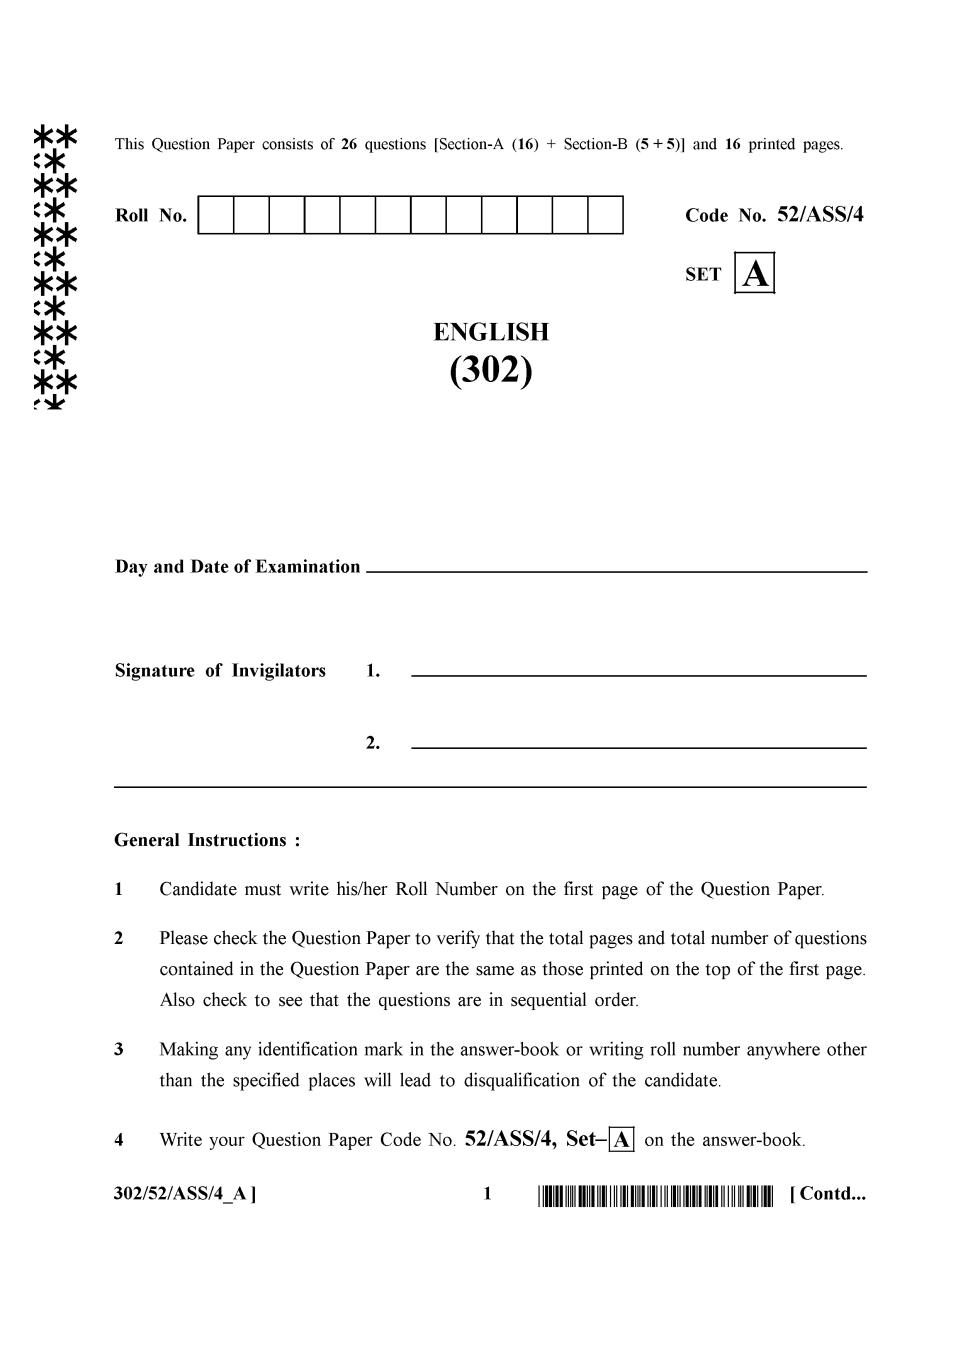 NIOS Class 12 Question Paper Apr 2016 - English - Page 1